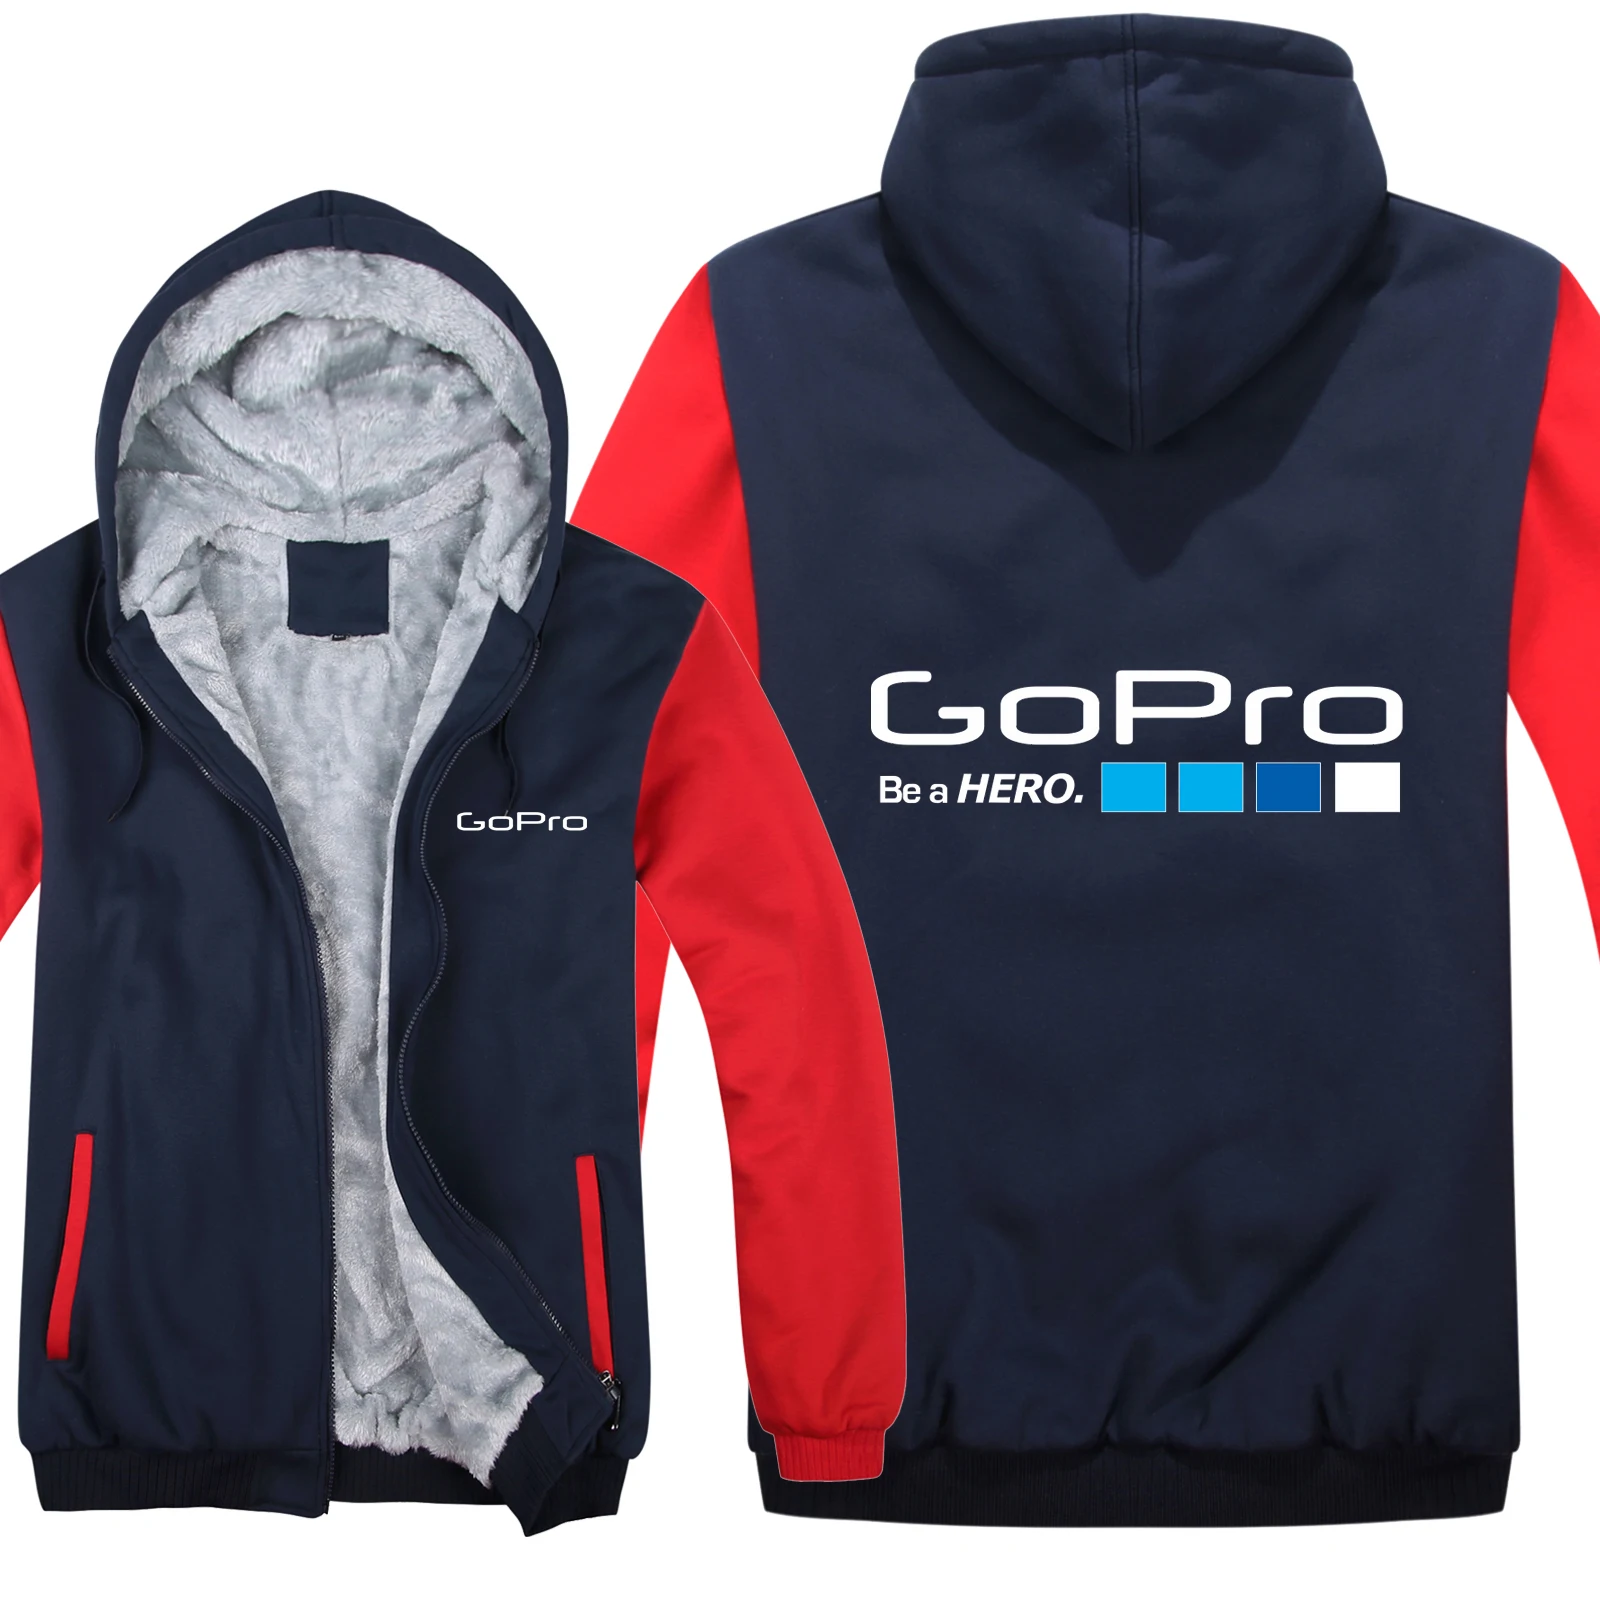 

2021 Winter for Go pro Gopro Hoodies Men Fashion Wool Liner Jacket Sweatshirts Men Coat Pullover Jackets 6